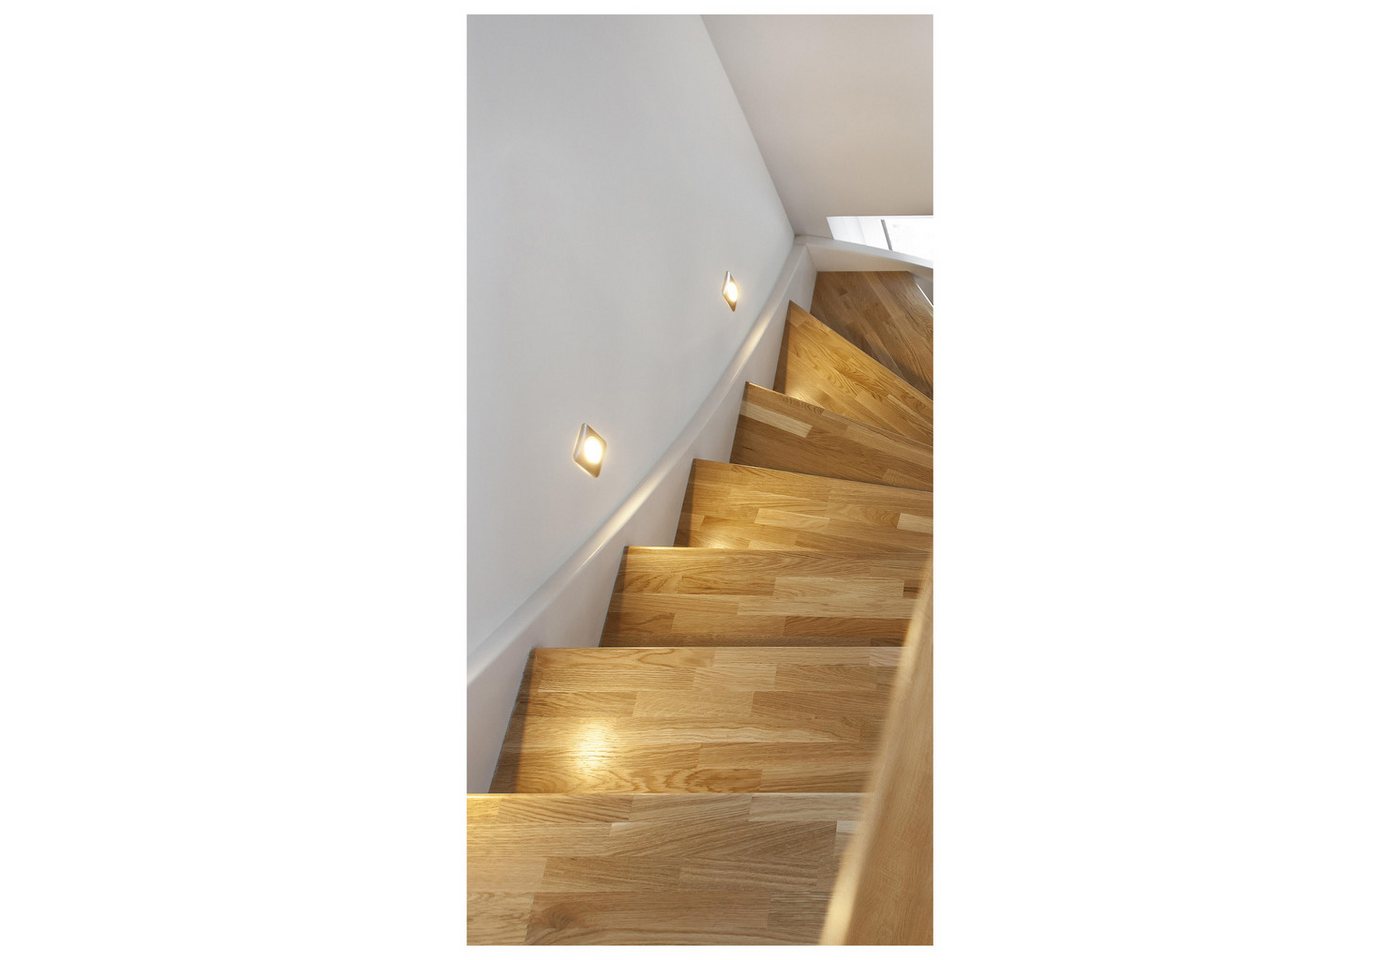 wandmotiv24 Türtapete Blick auf Holz-treppe, Treppen-stufen, glatt, Fototapete, Wandtapete, Motivtapete, matt, selbstklebende Vliestapete von wandmotiv24